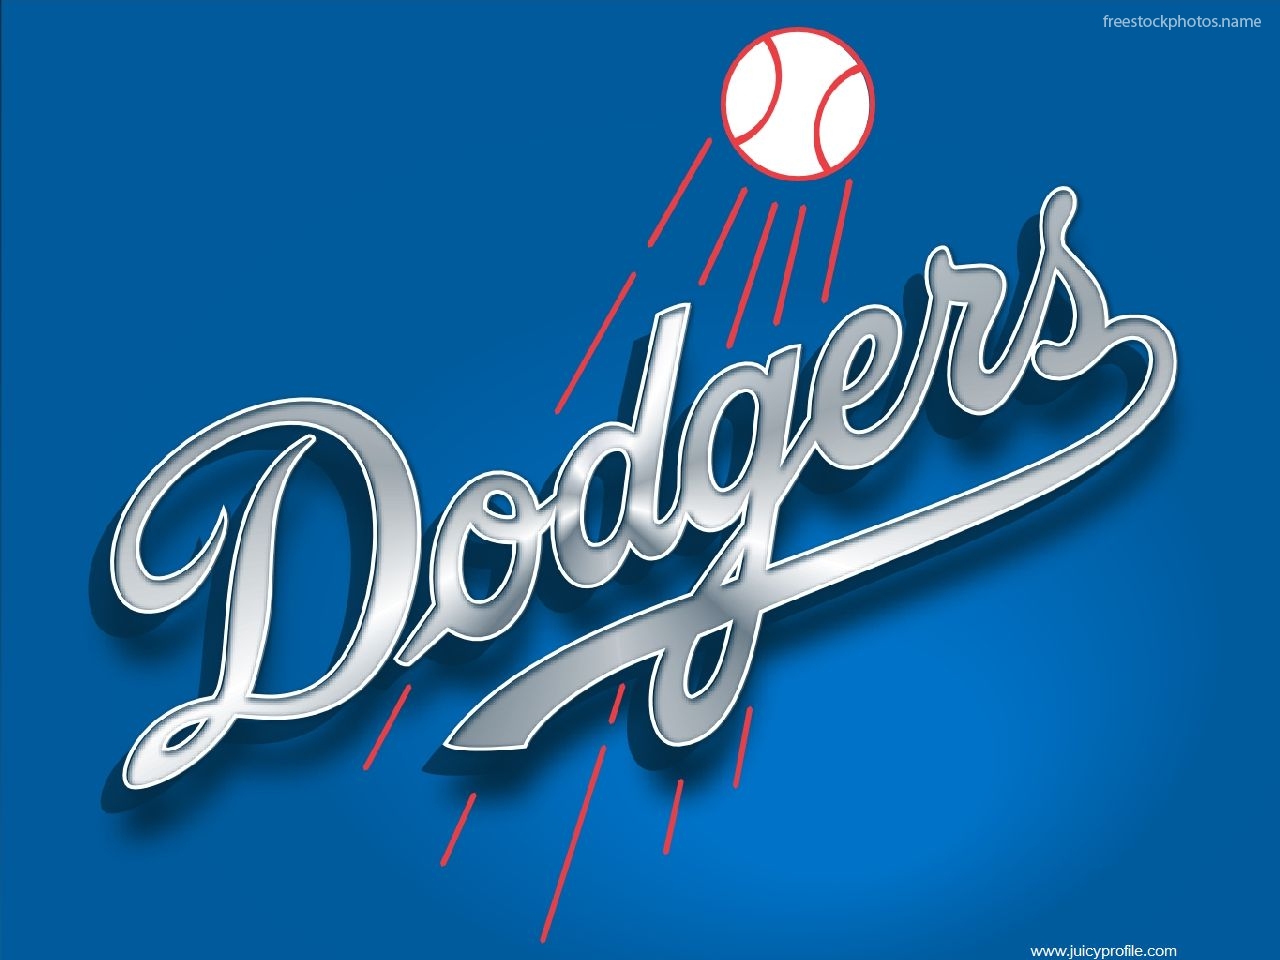 Stock Photos Of Dodgers Desktop HD Wallpaper